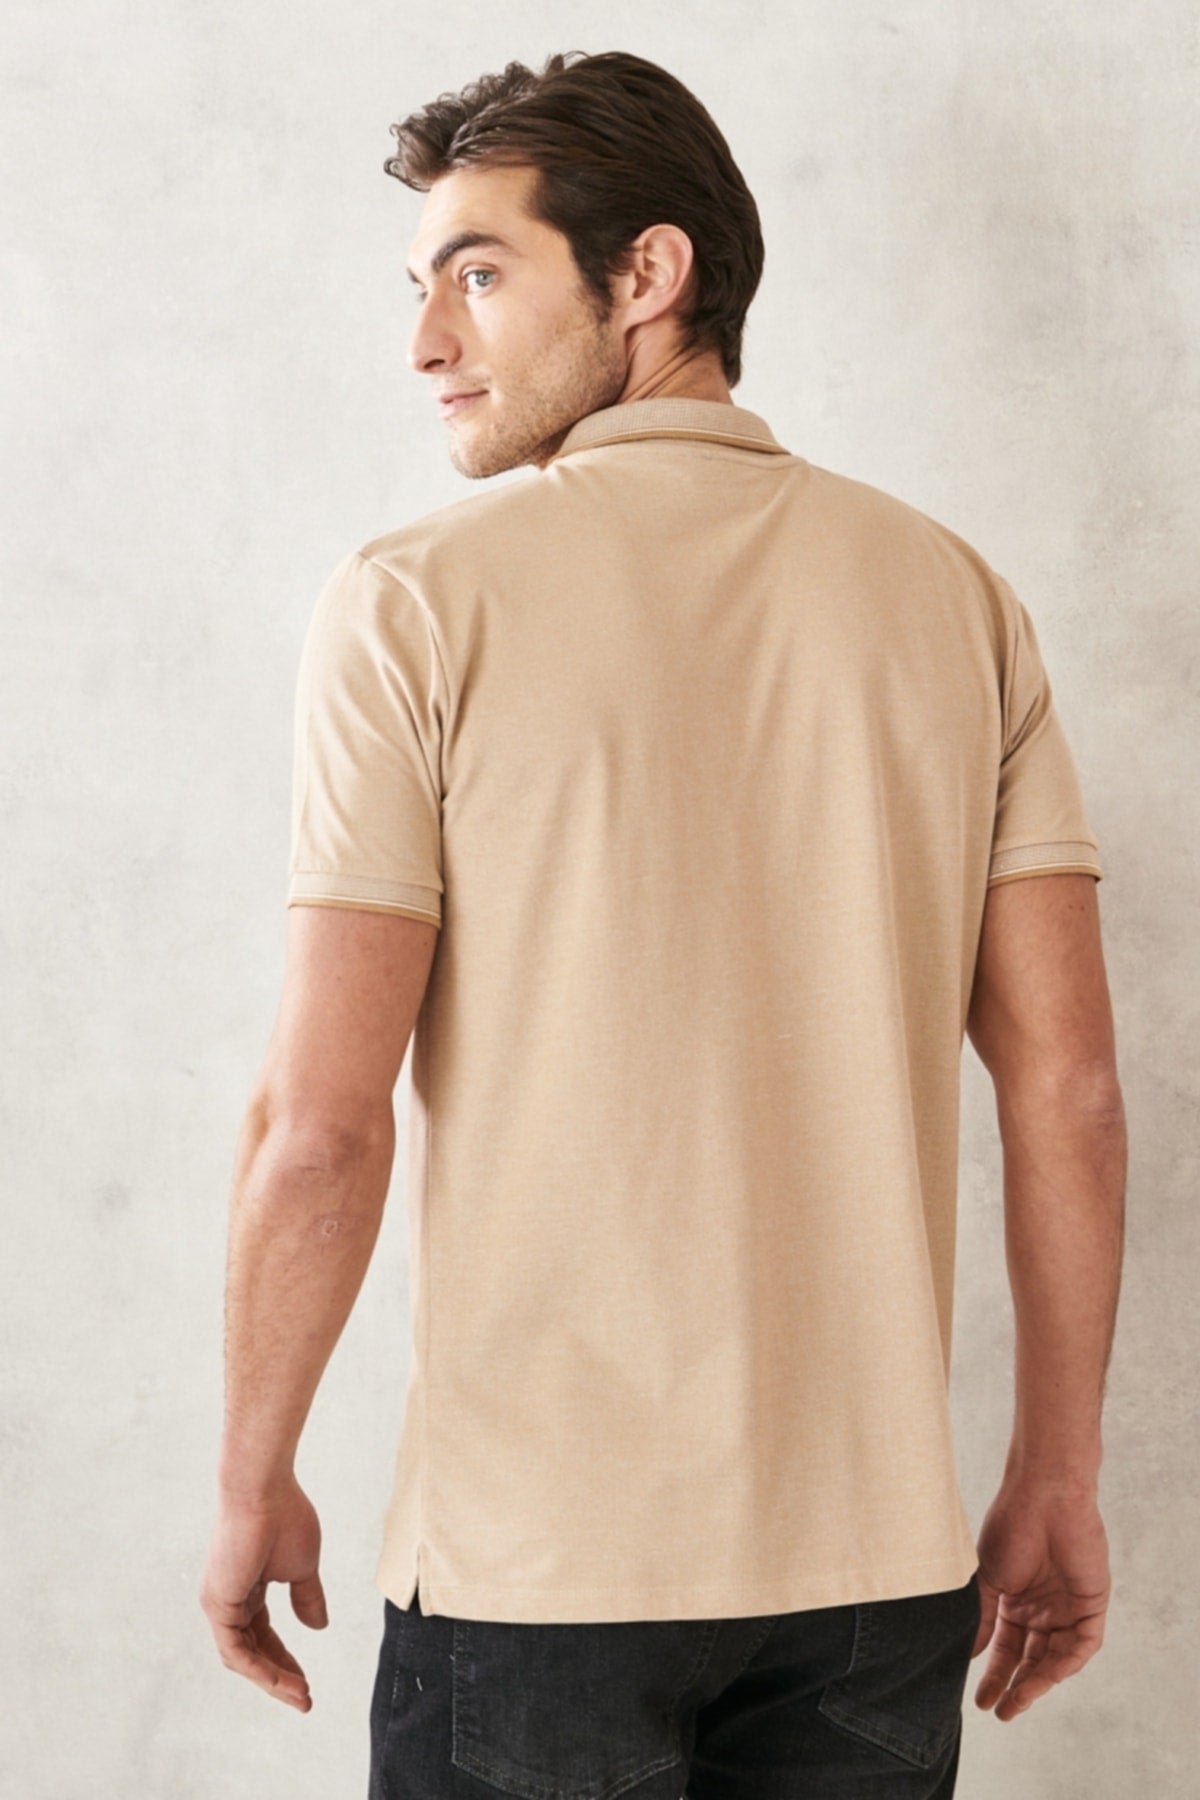 Men's Non-Shrink Cotton Fabric Slim Fit Slim Fit Light Beige-White Anti-roll Polo Neck T-Shirt